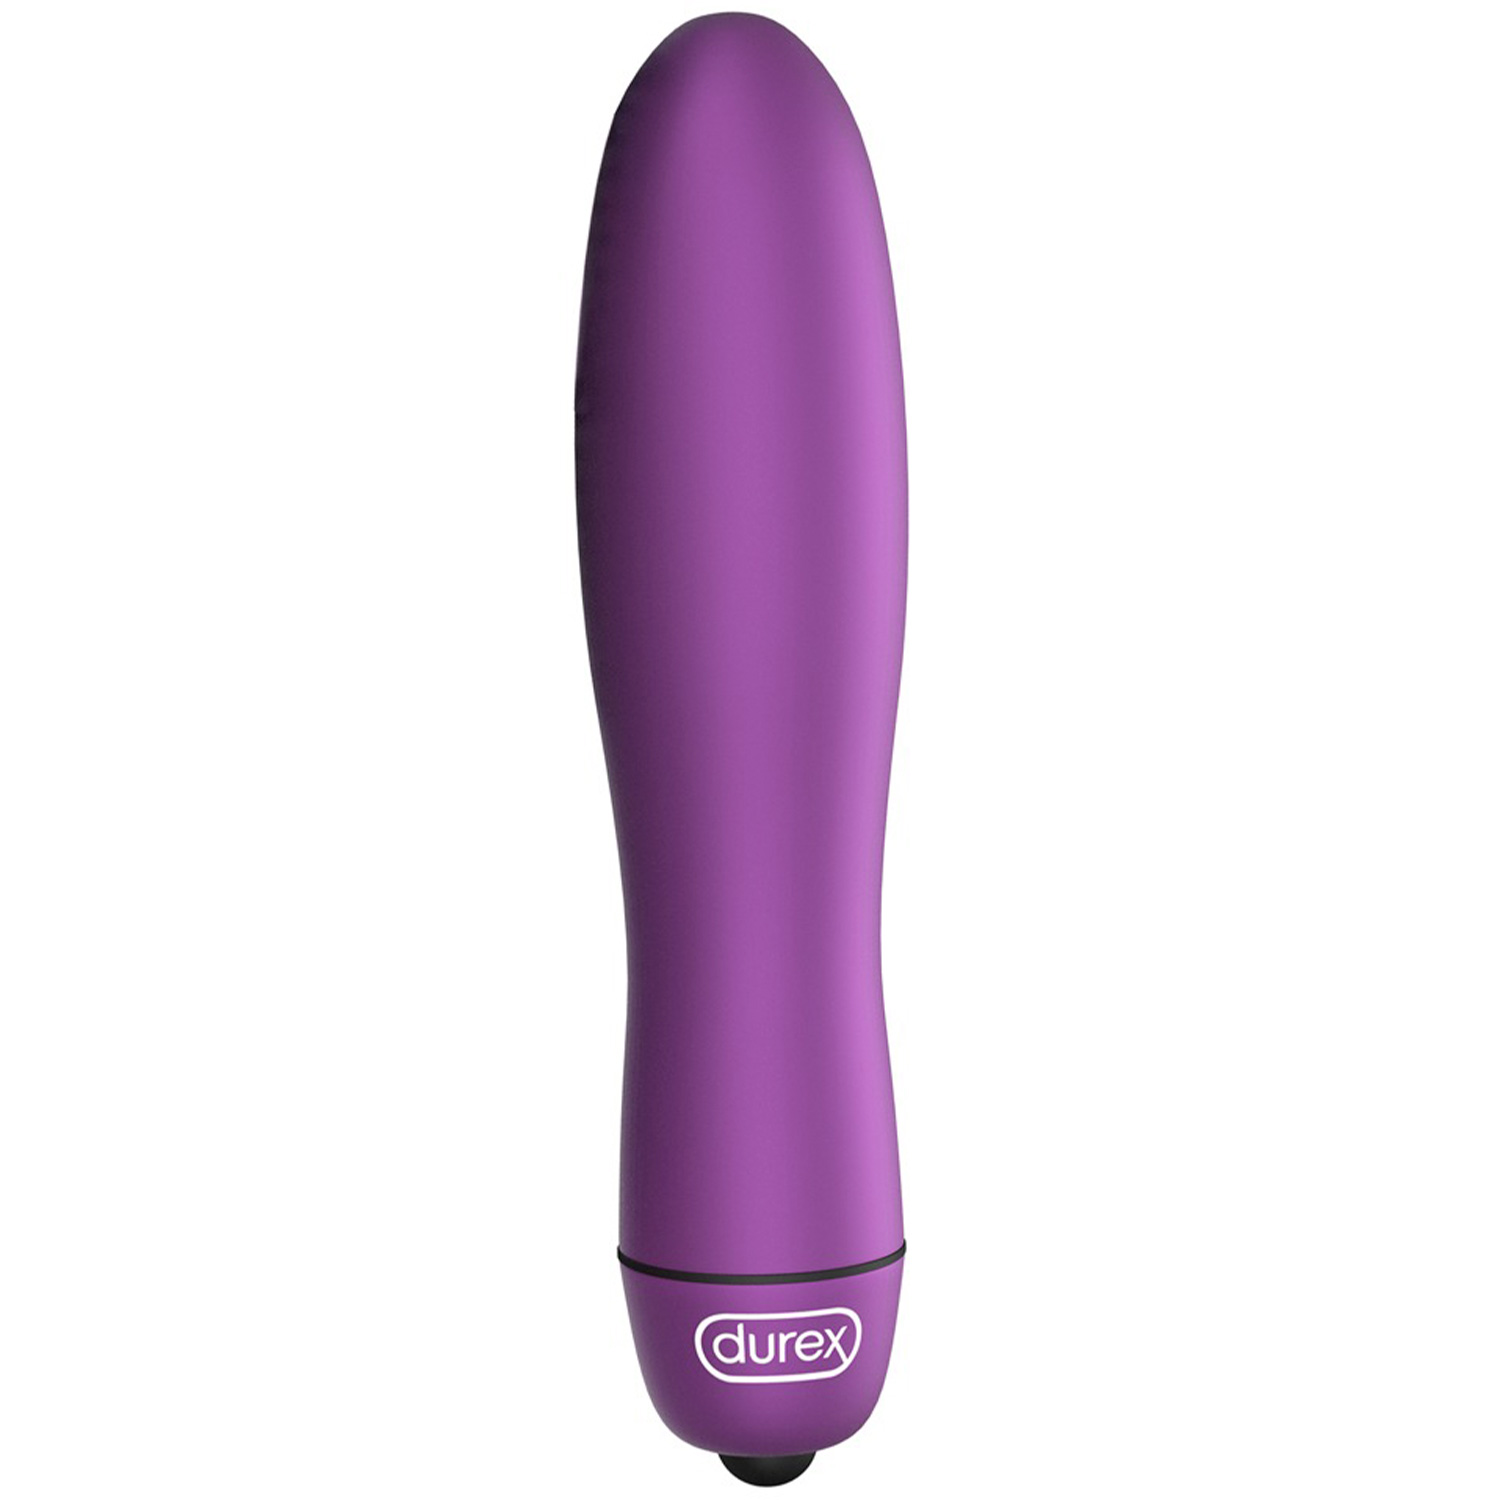 Durex Intense Delight Bullet Vibrator - Purple